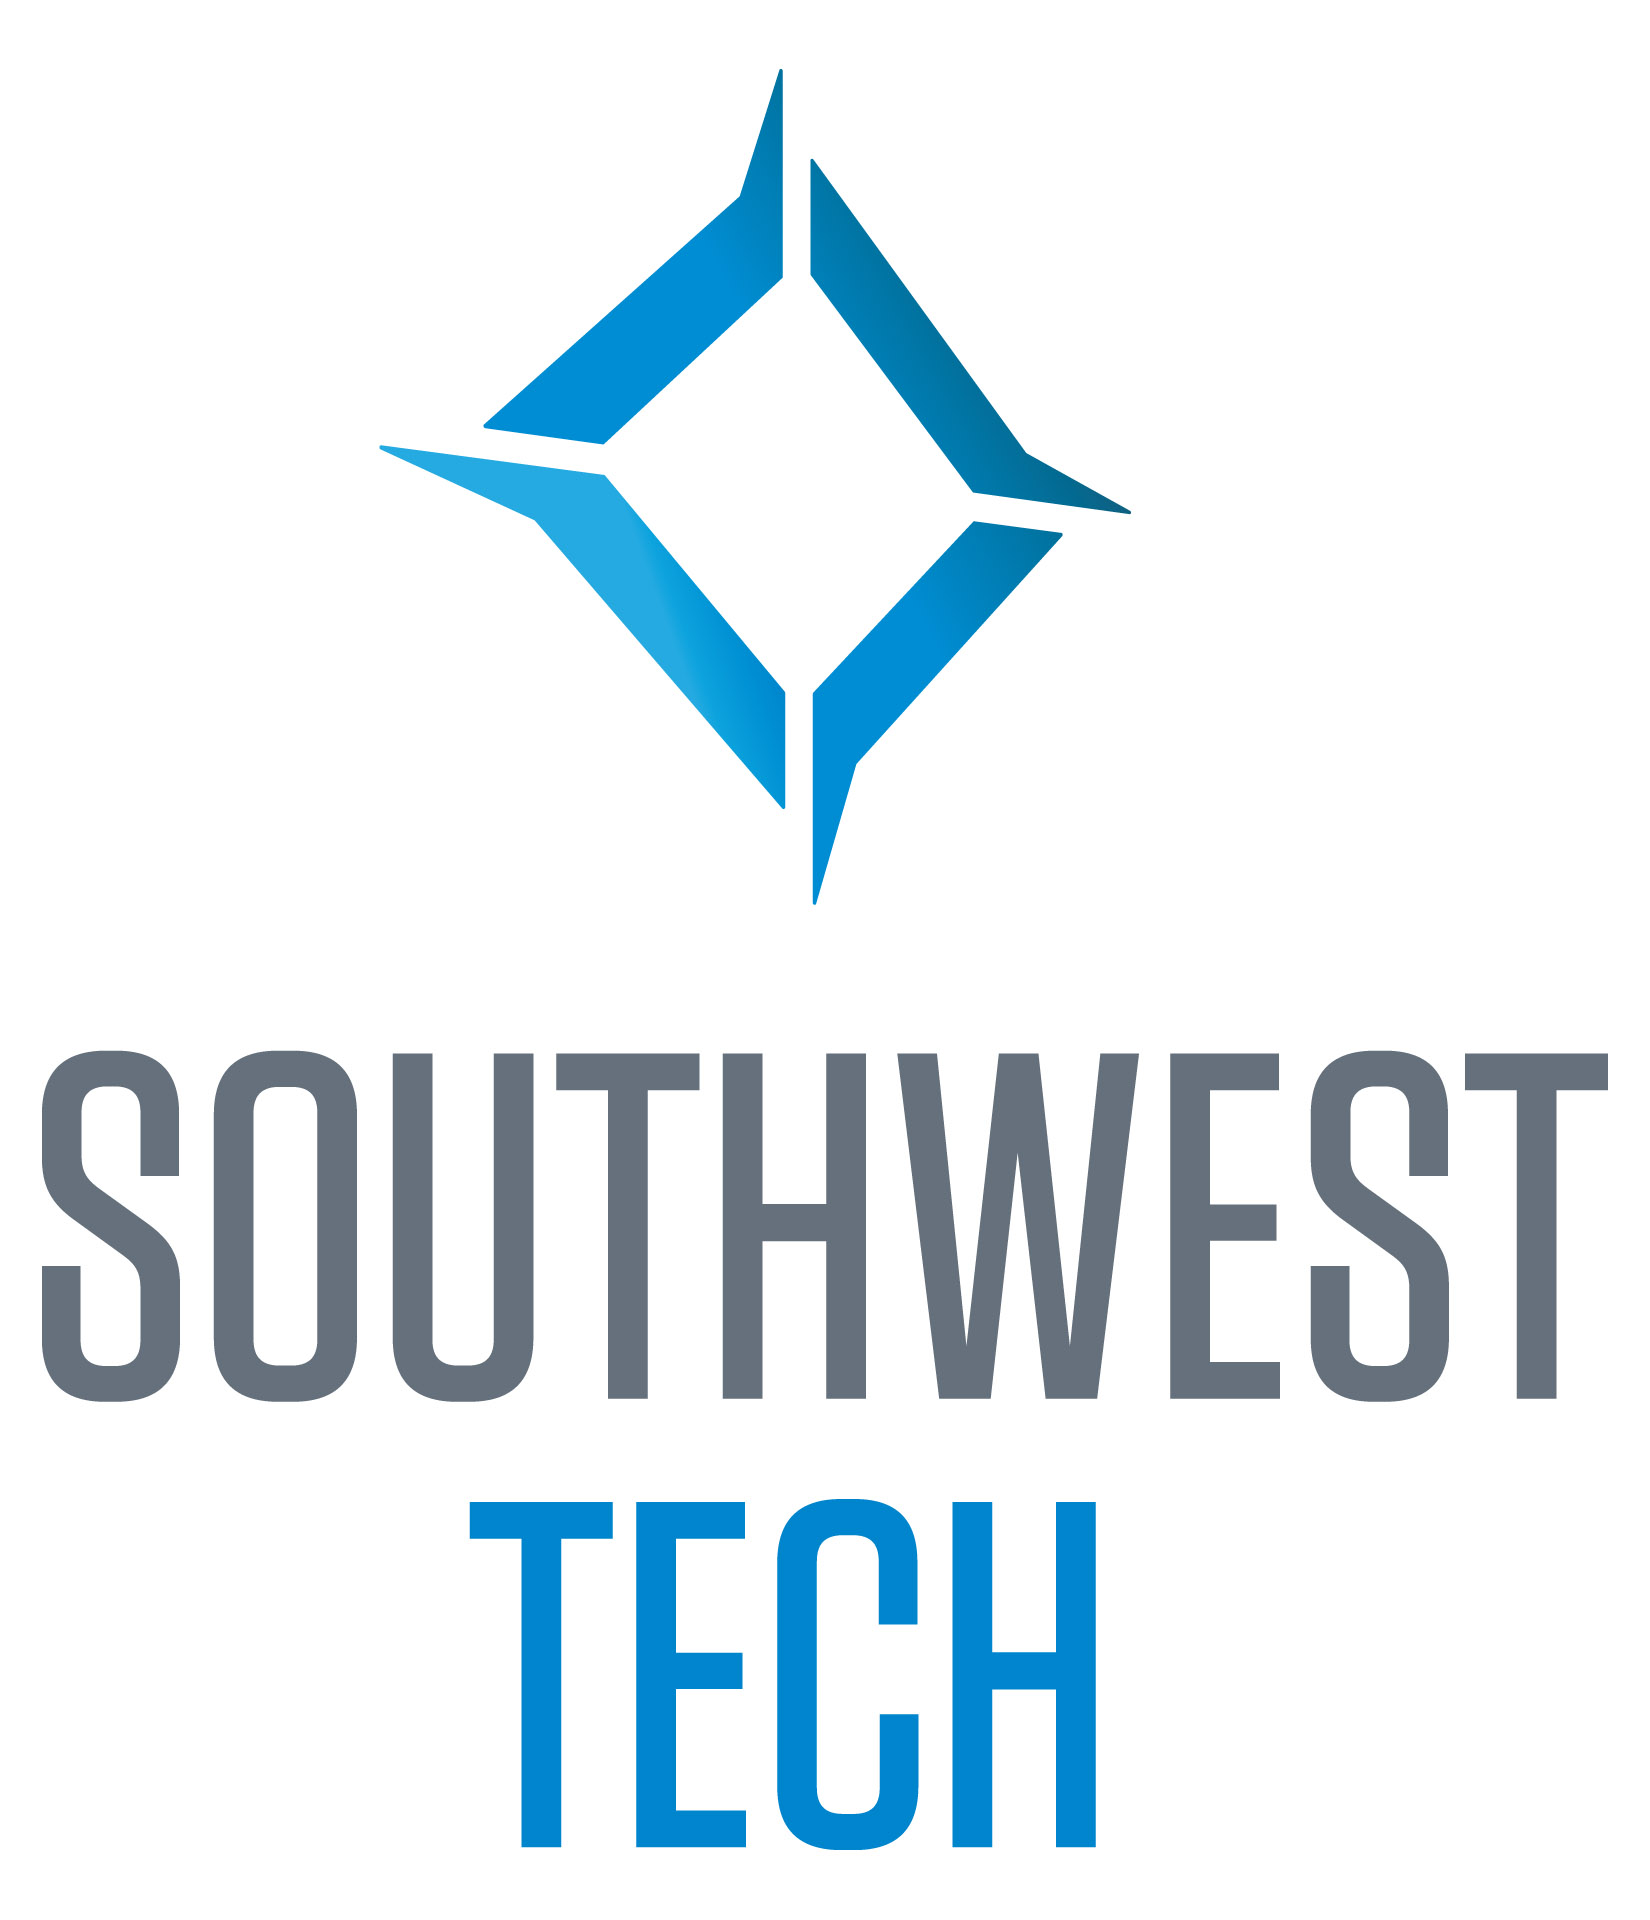 Southwest Tech